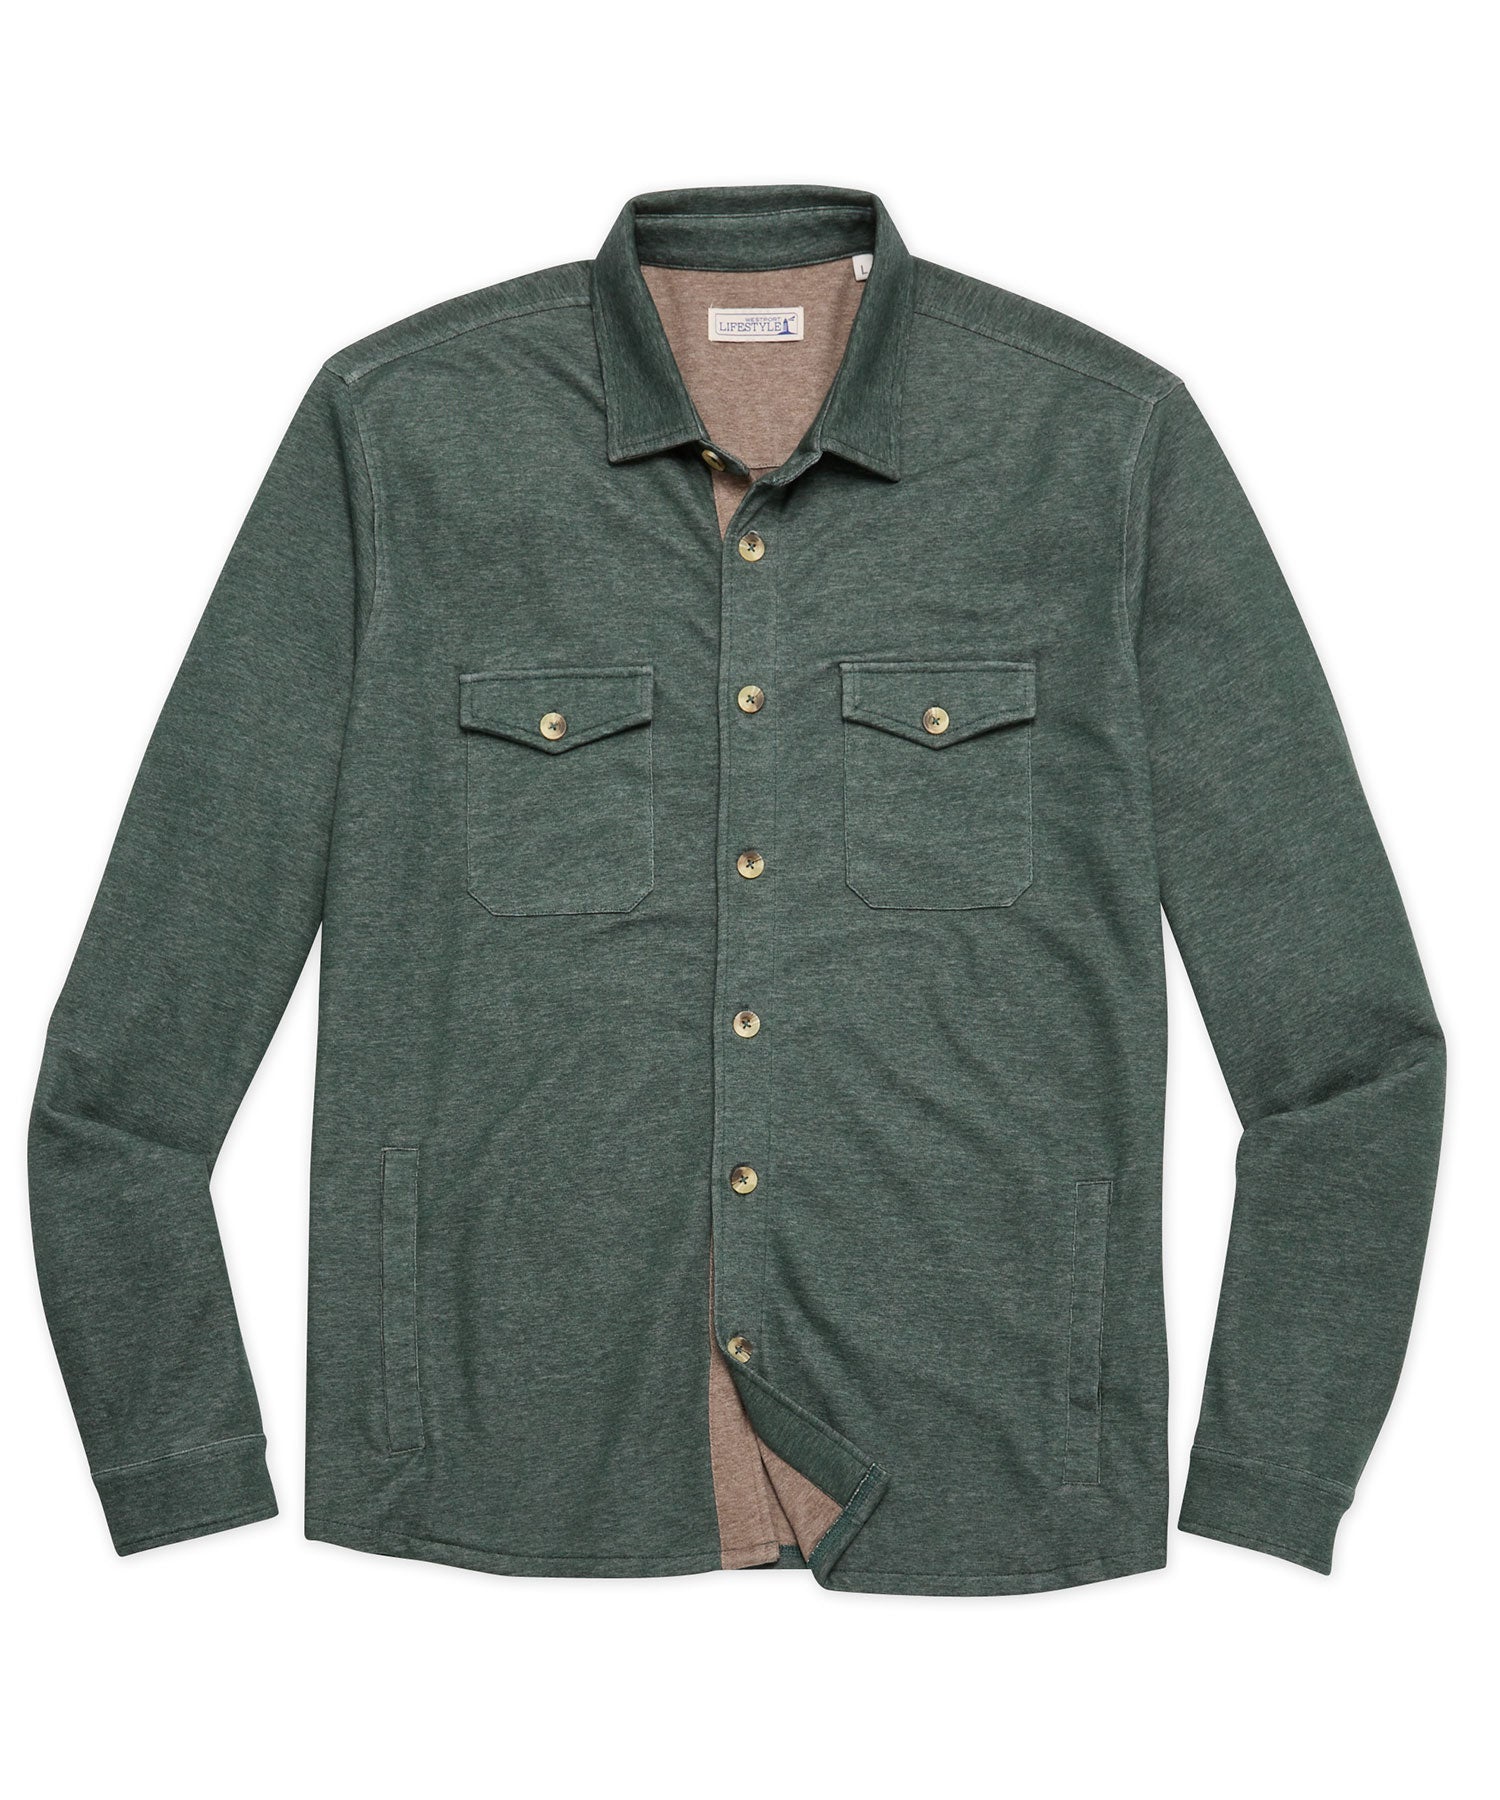 Westport Lifestyle Melange Soft Cotton-Blend Overshirt, Men's Big & Tall